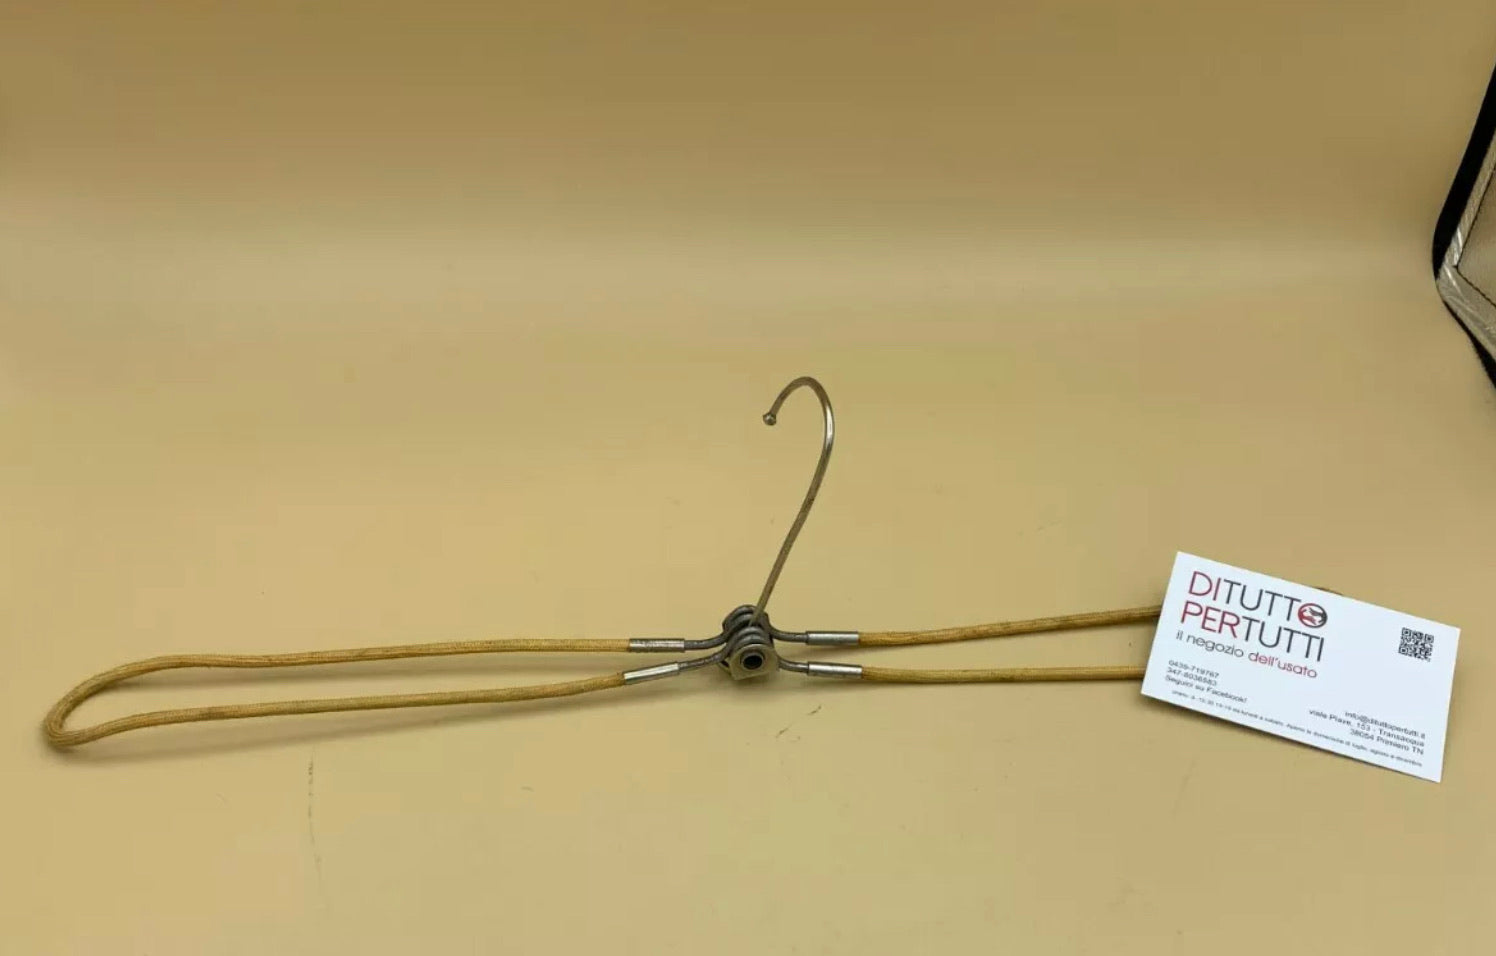 Antique iron wire coat hanger wire hanger schutzmarke – Dituttopertutti  Mercatino dell'Usato